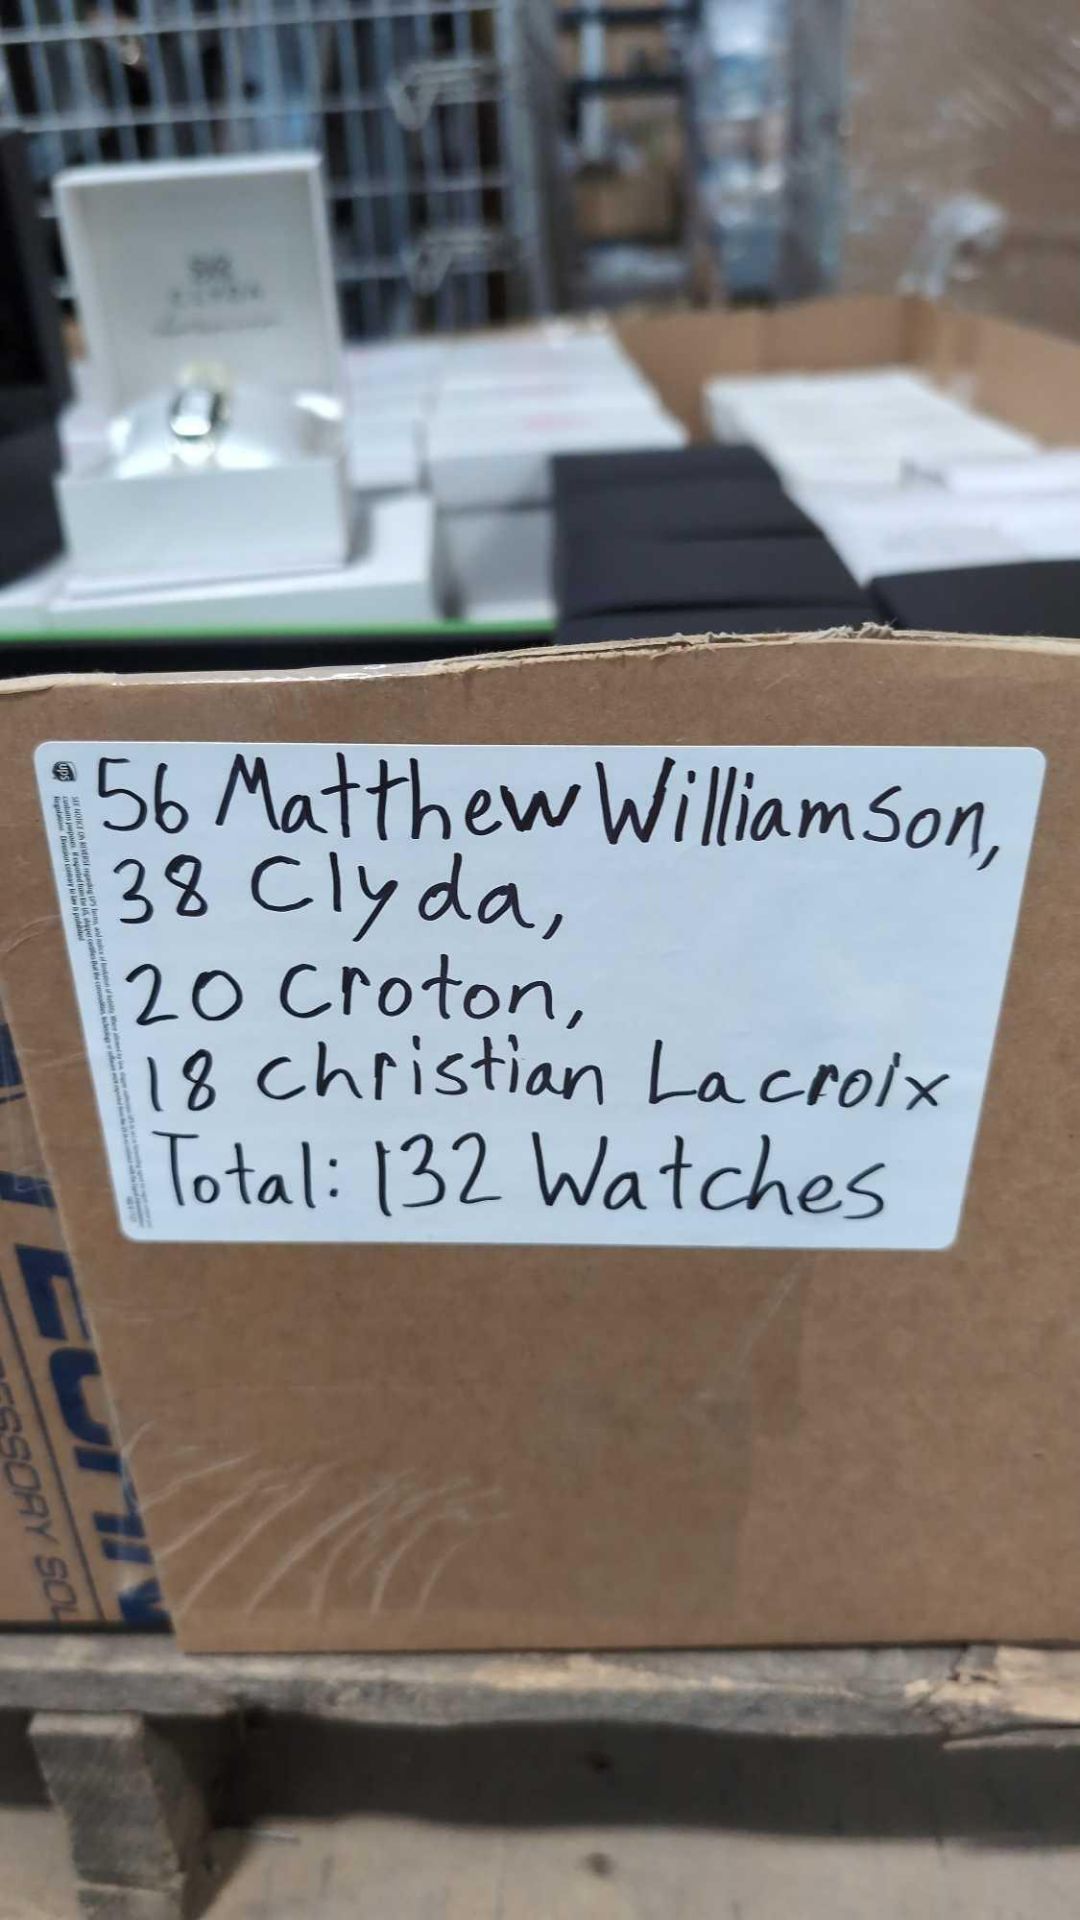 132 Watches: 56 Matthew Williamso, 38 clyda, 20 croton, 18 christian Lecroix - Image 2 of 13